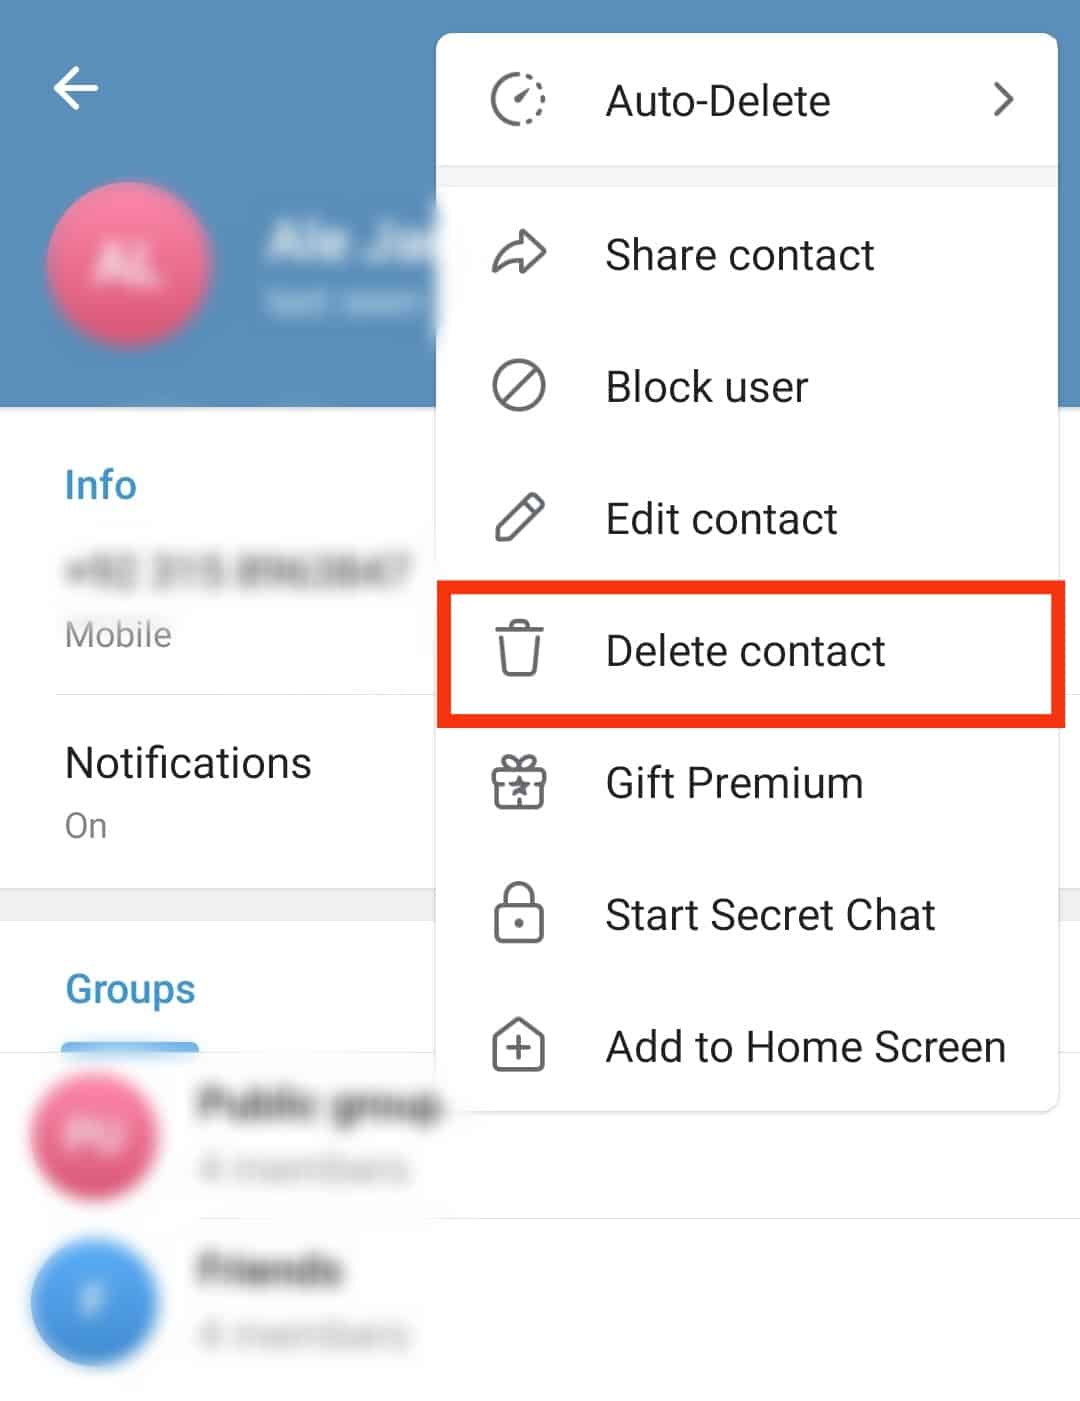 Select Delete Contact